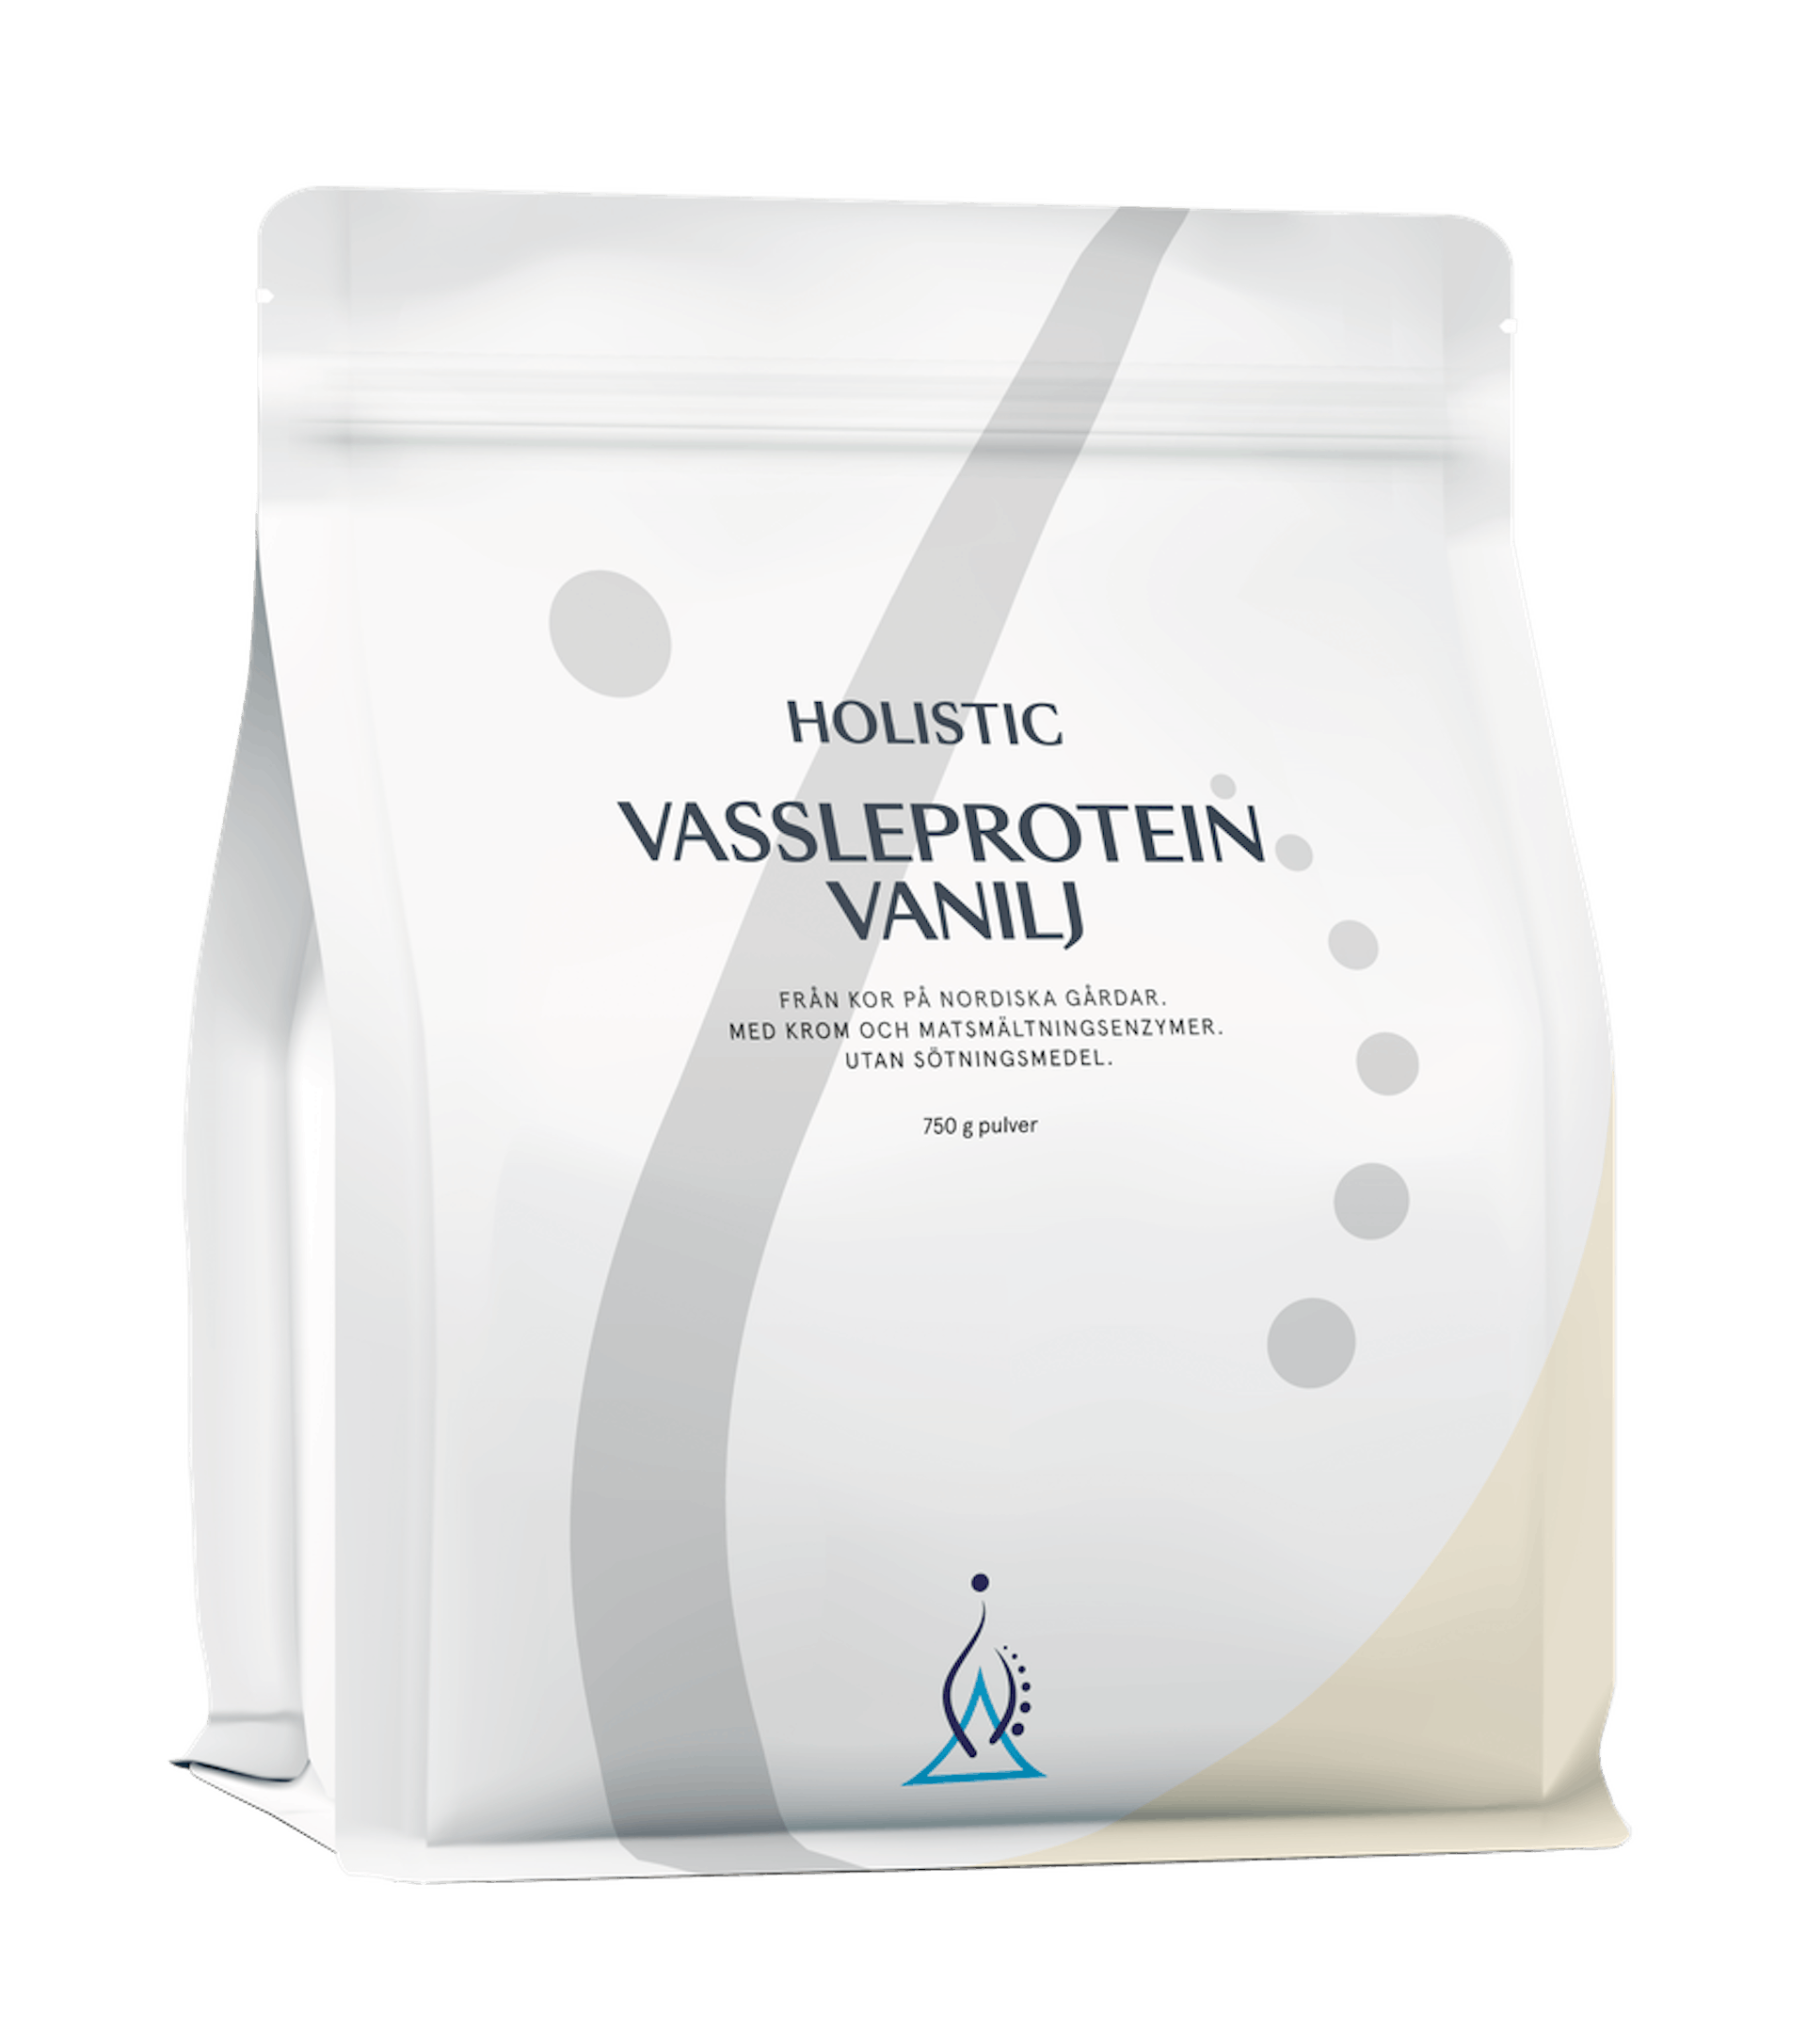 Vassleprotein vanilj, 750 g